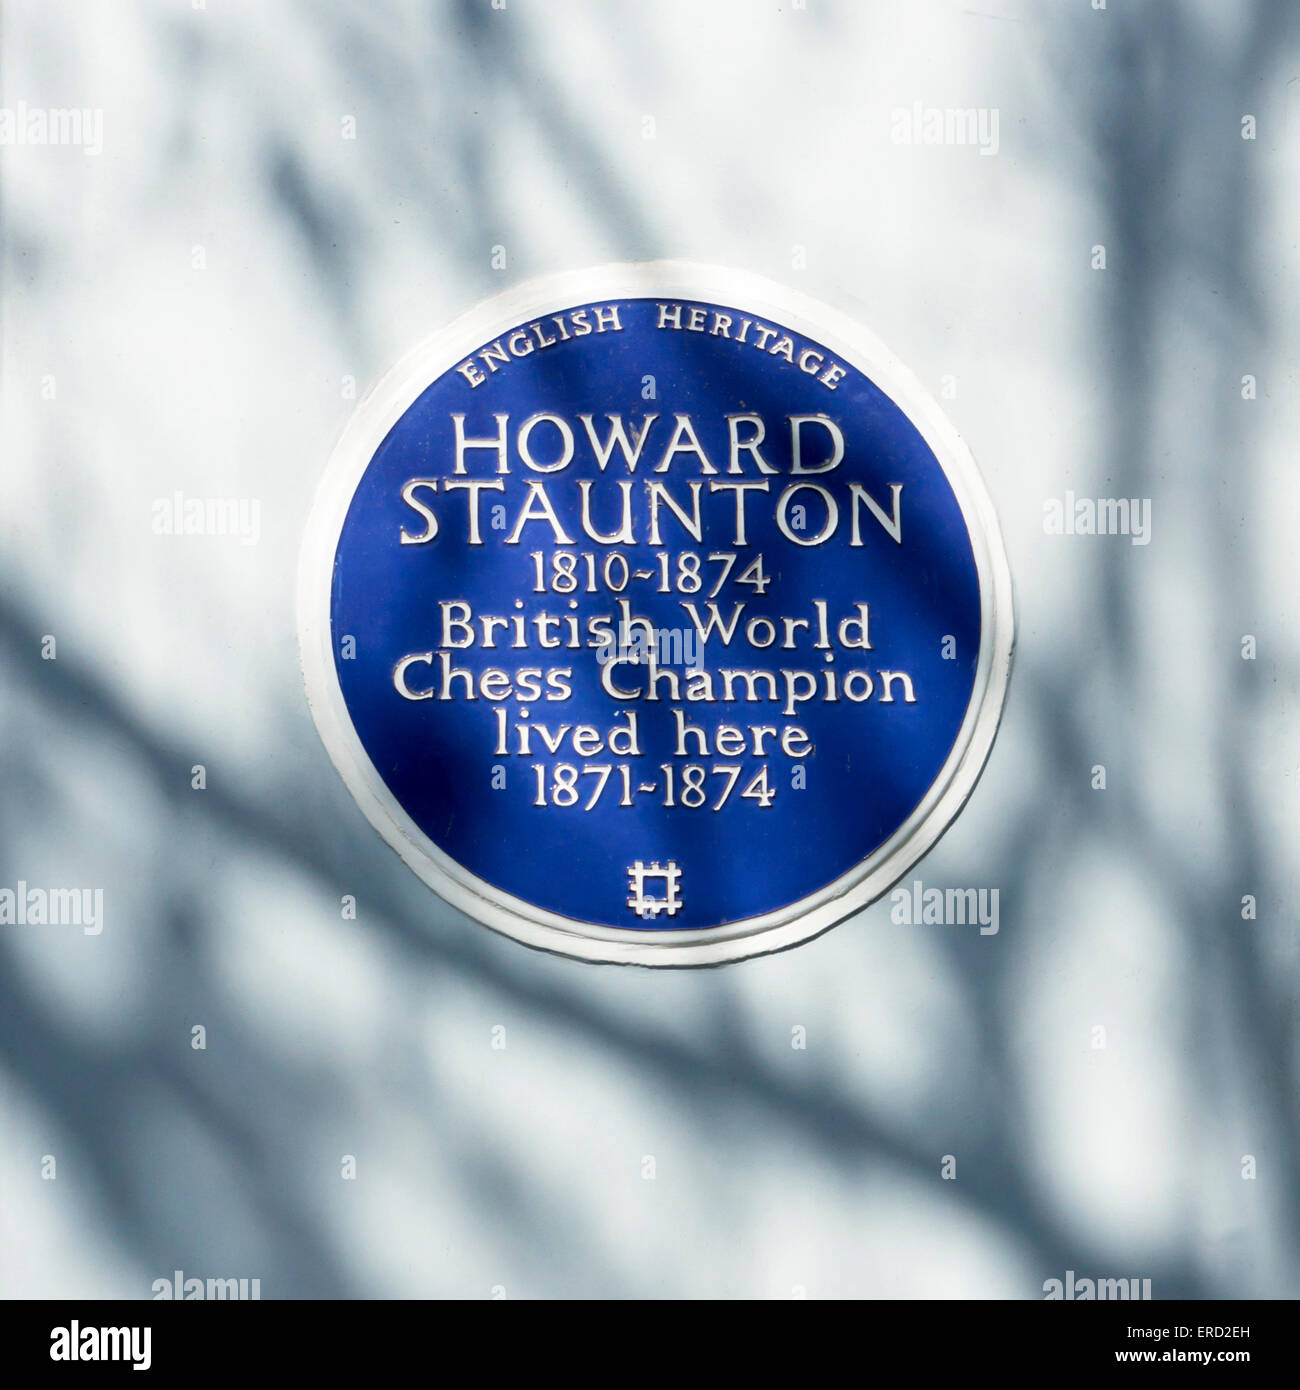 A blue plaque commemorating the nineteenth century British World Chess Champion, Howard Staunton. Stock Photo